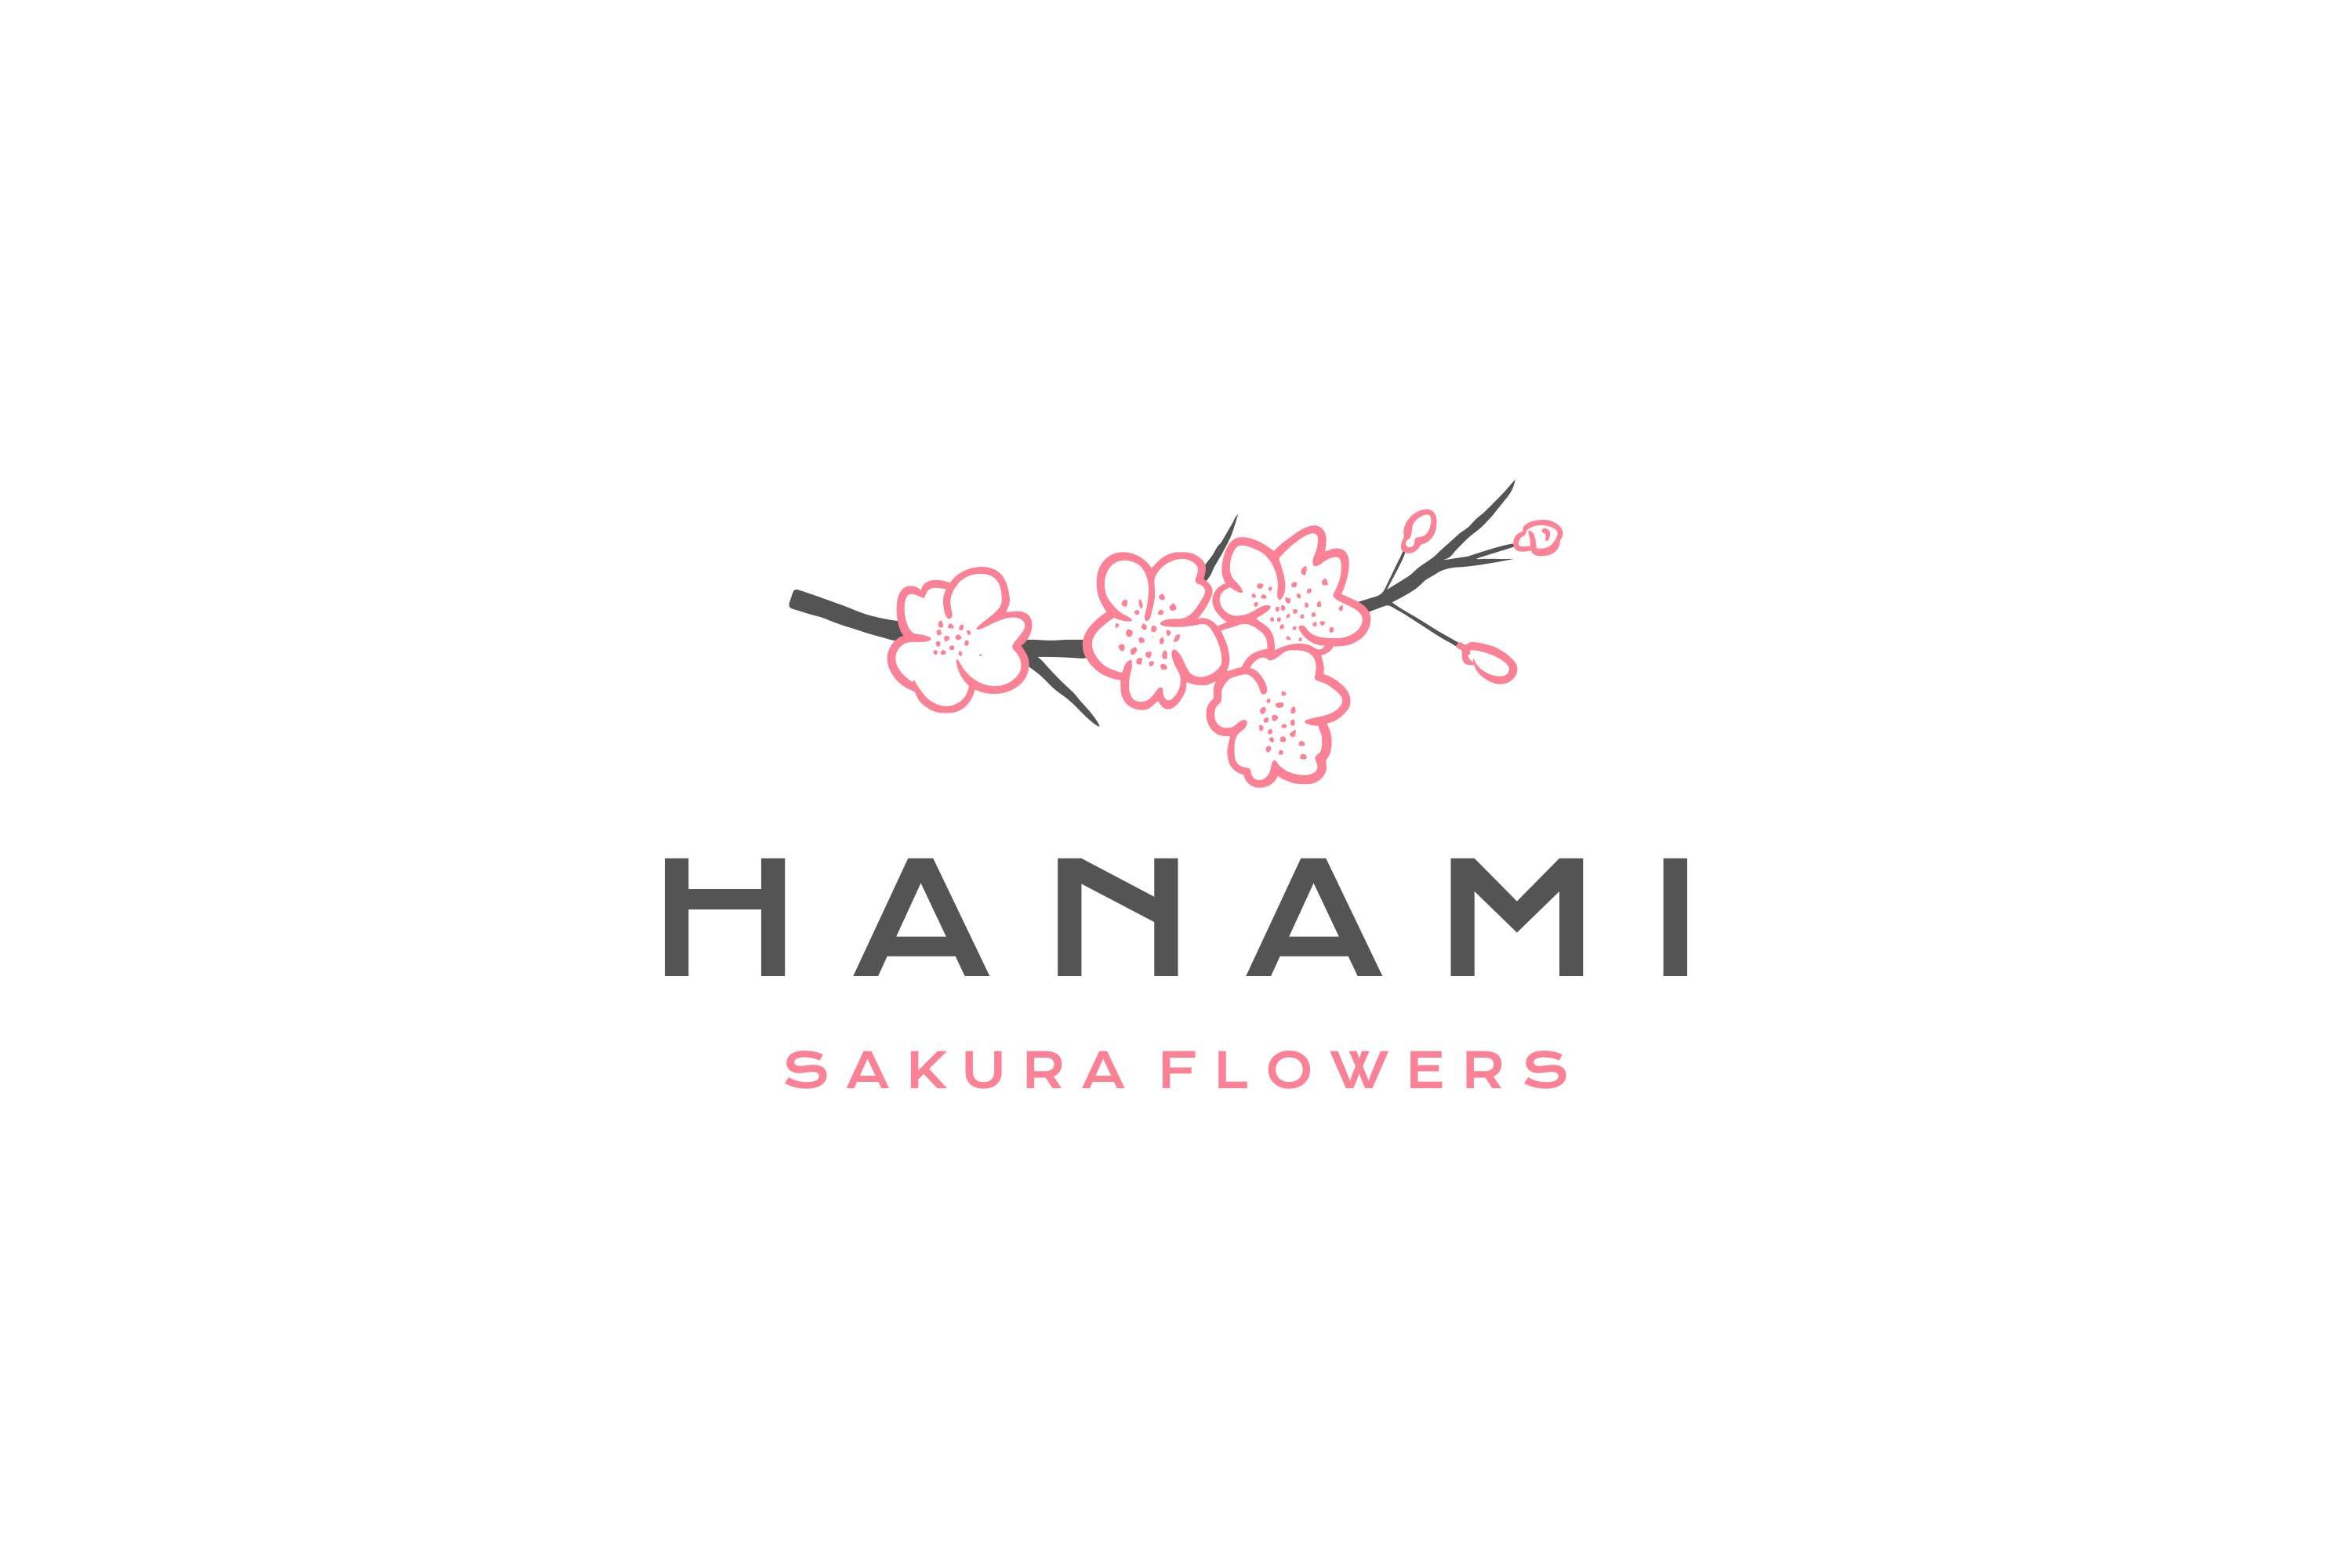 Japanese Sakura Flowers Logo Design cover image.